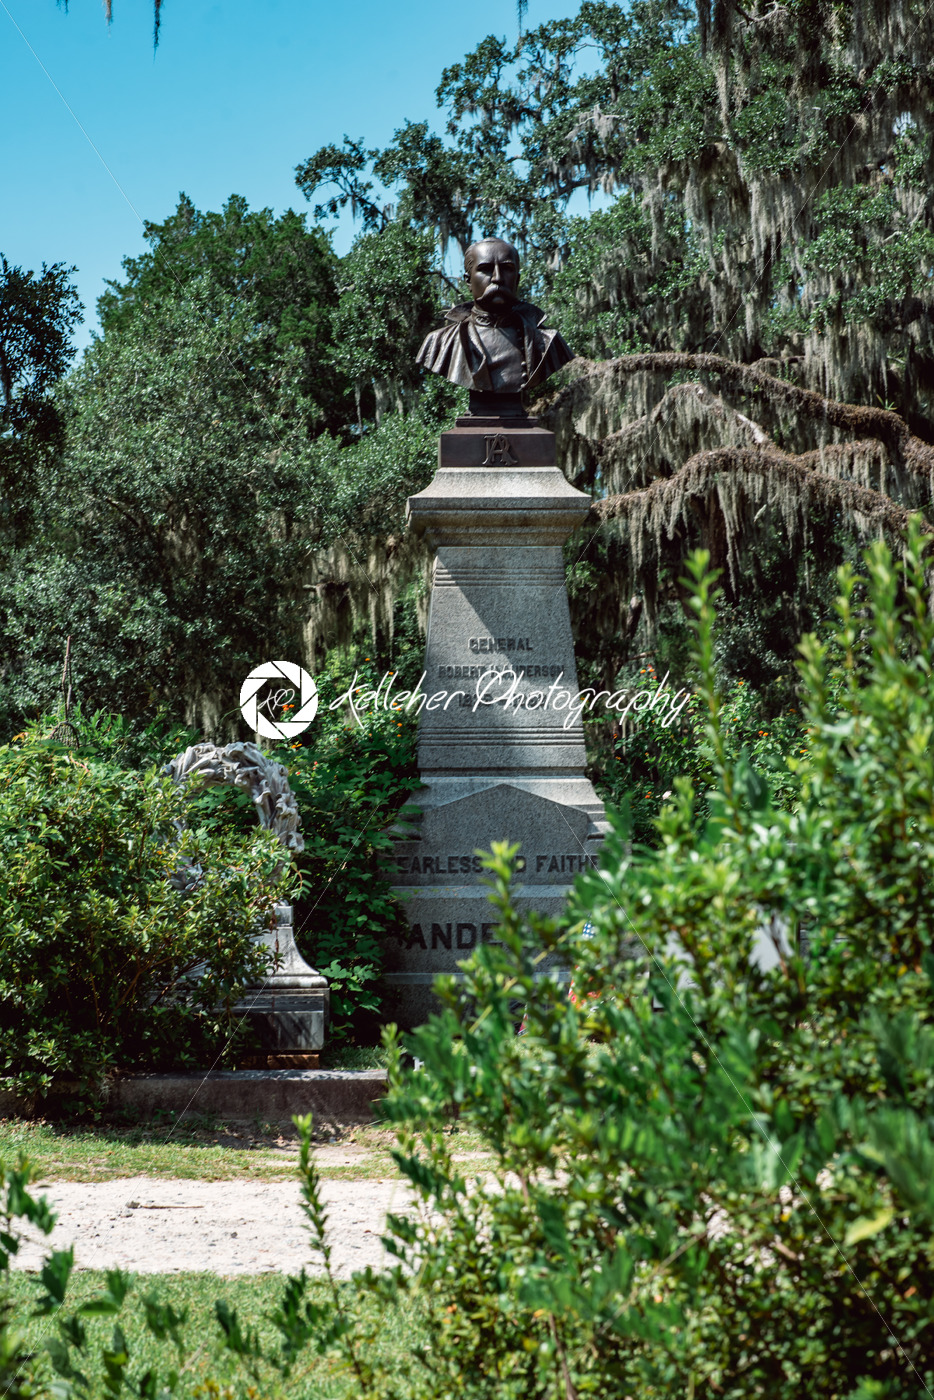 General Robert Harberson Cemetery Statuary Statue Bonaventure Cemetery Savannah Georgia - Kelleher Photography Store